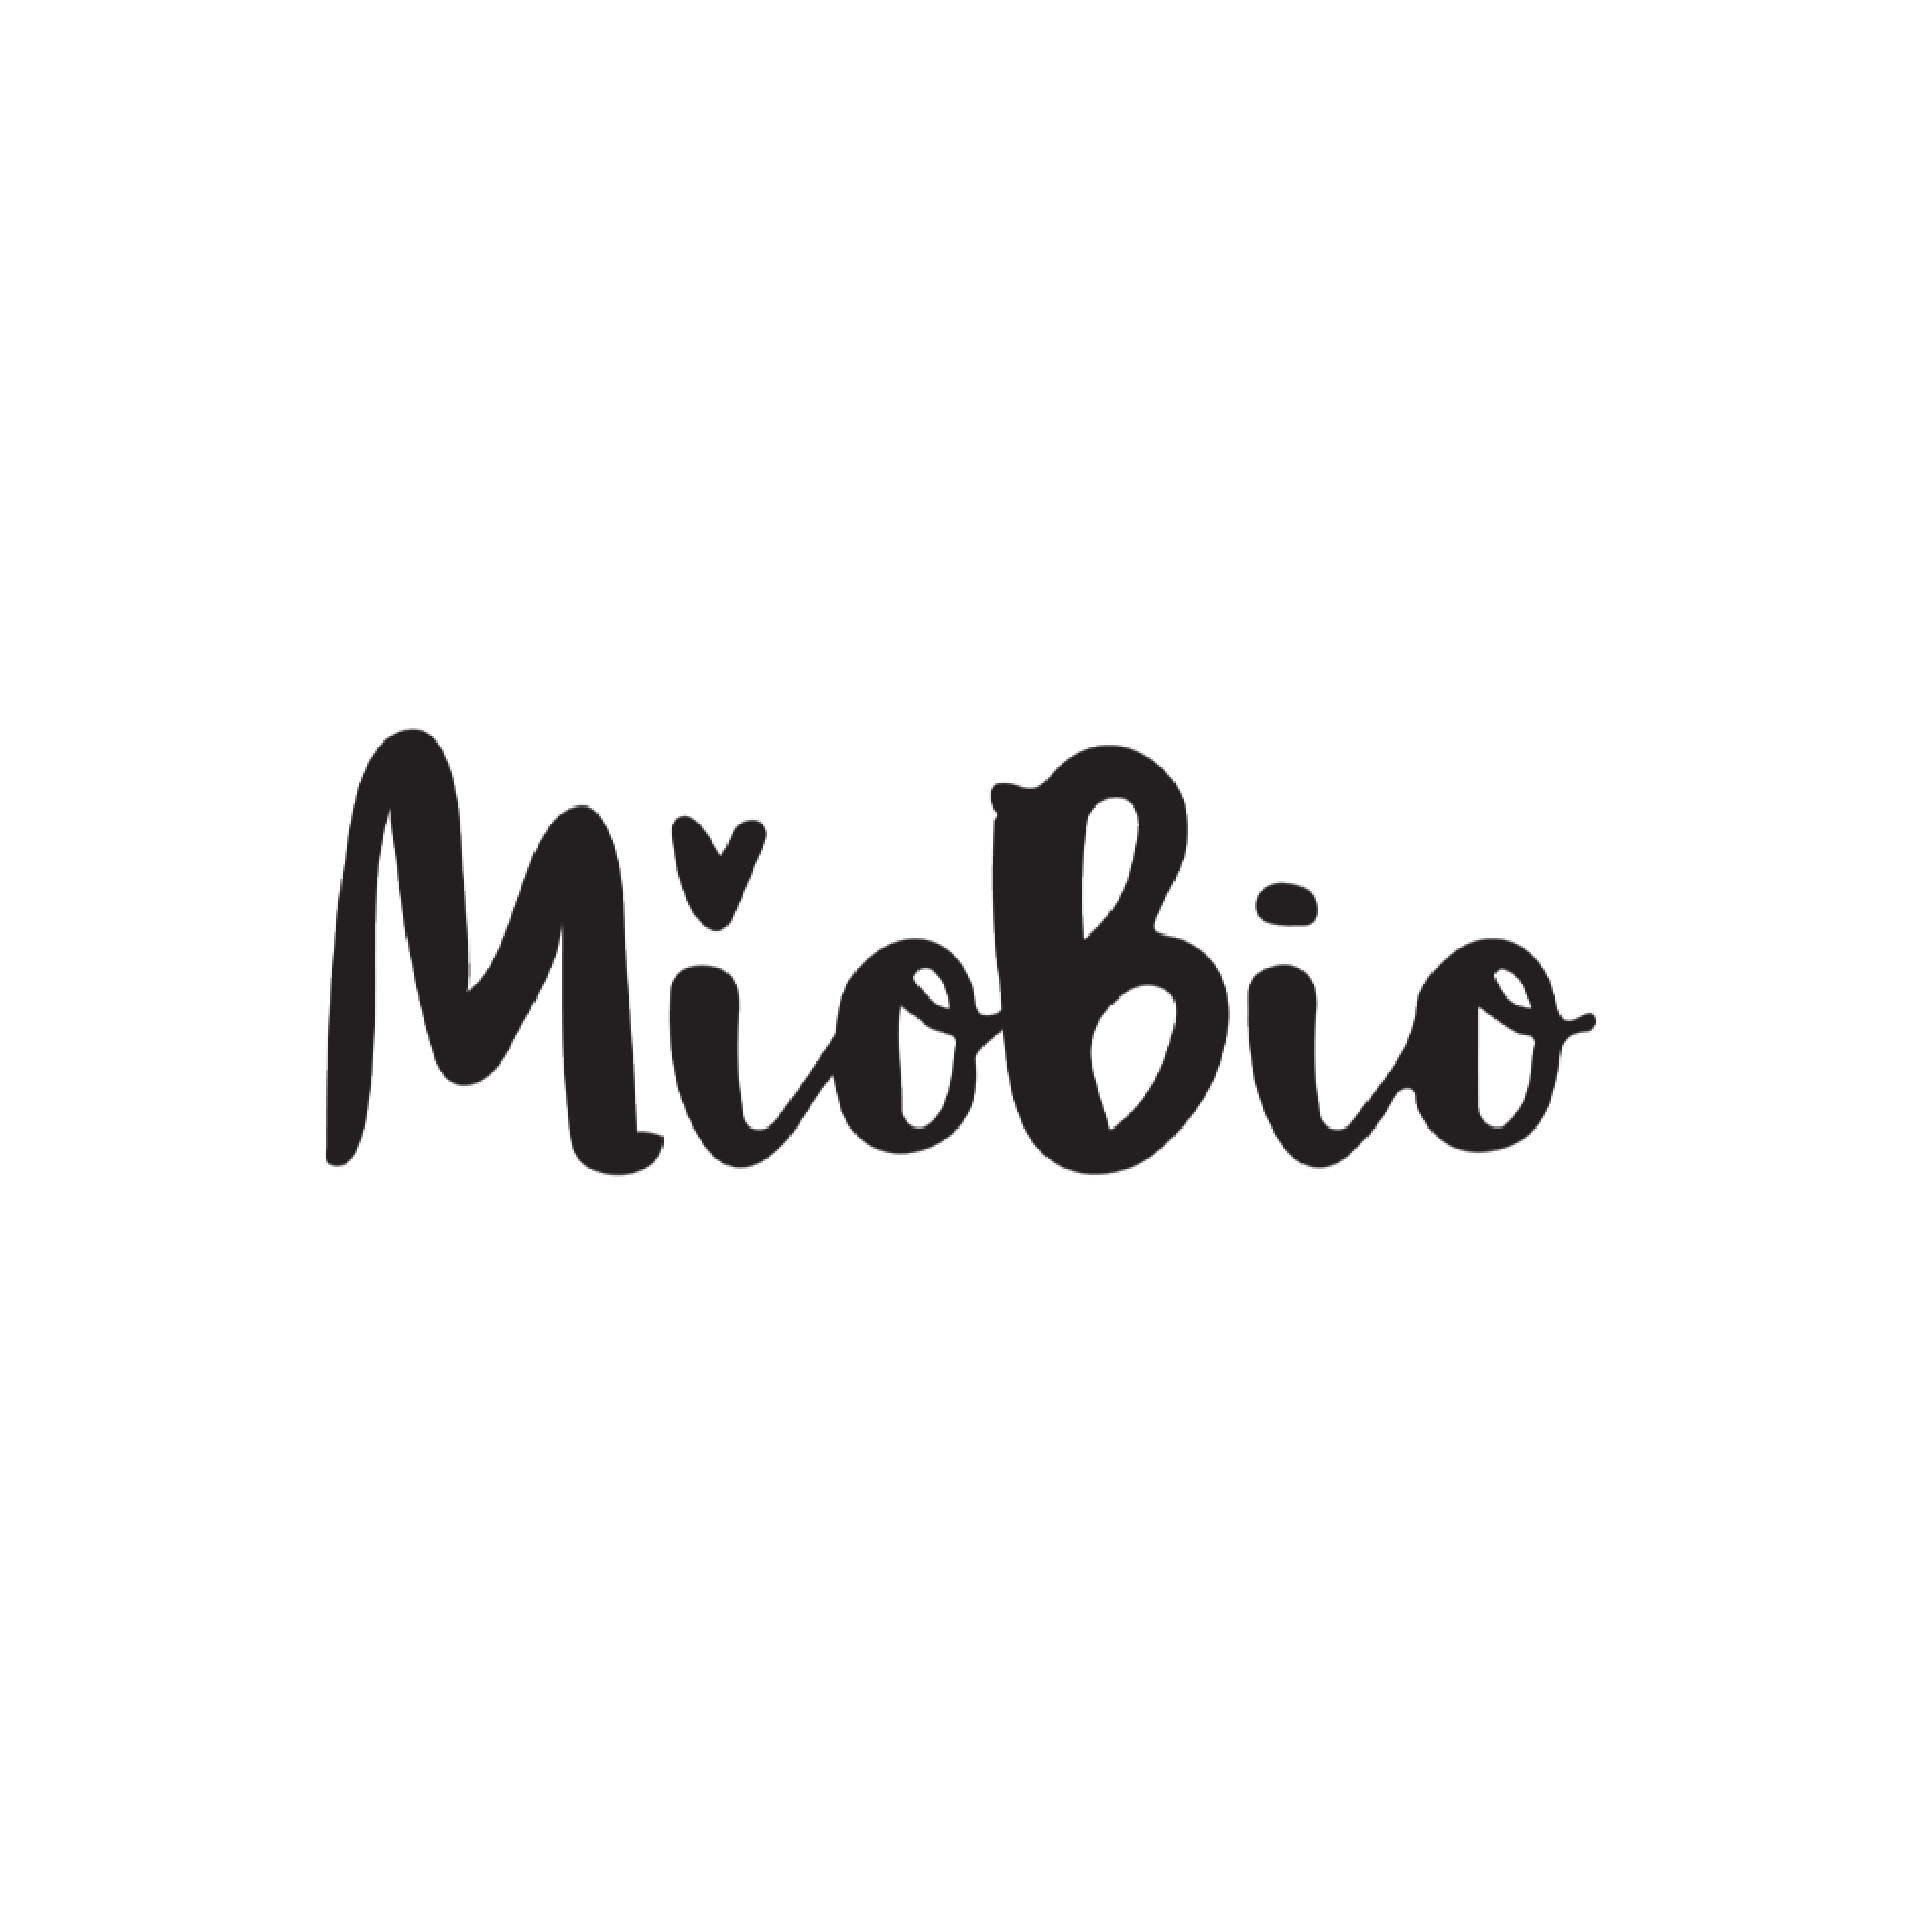 Miobio